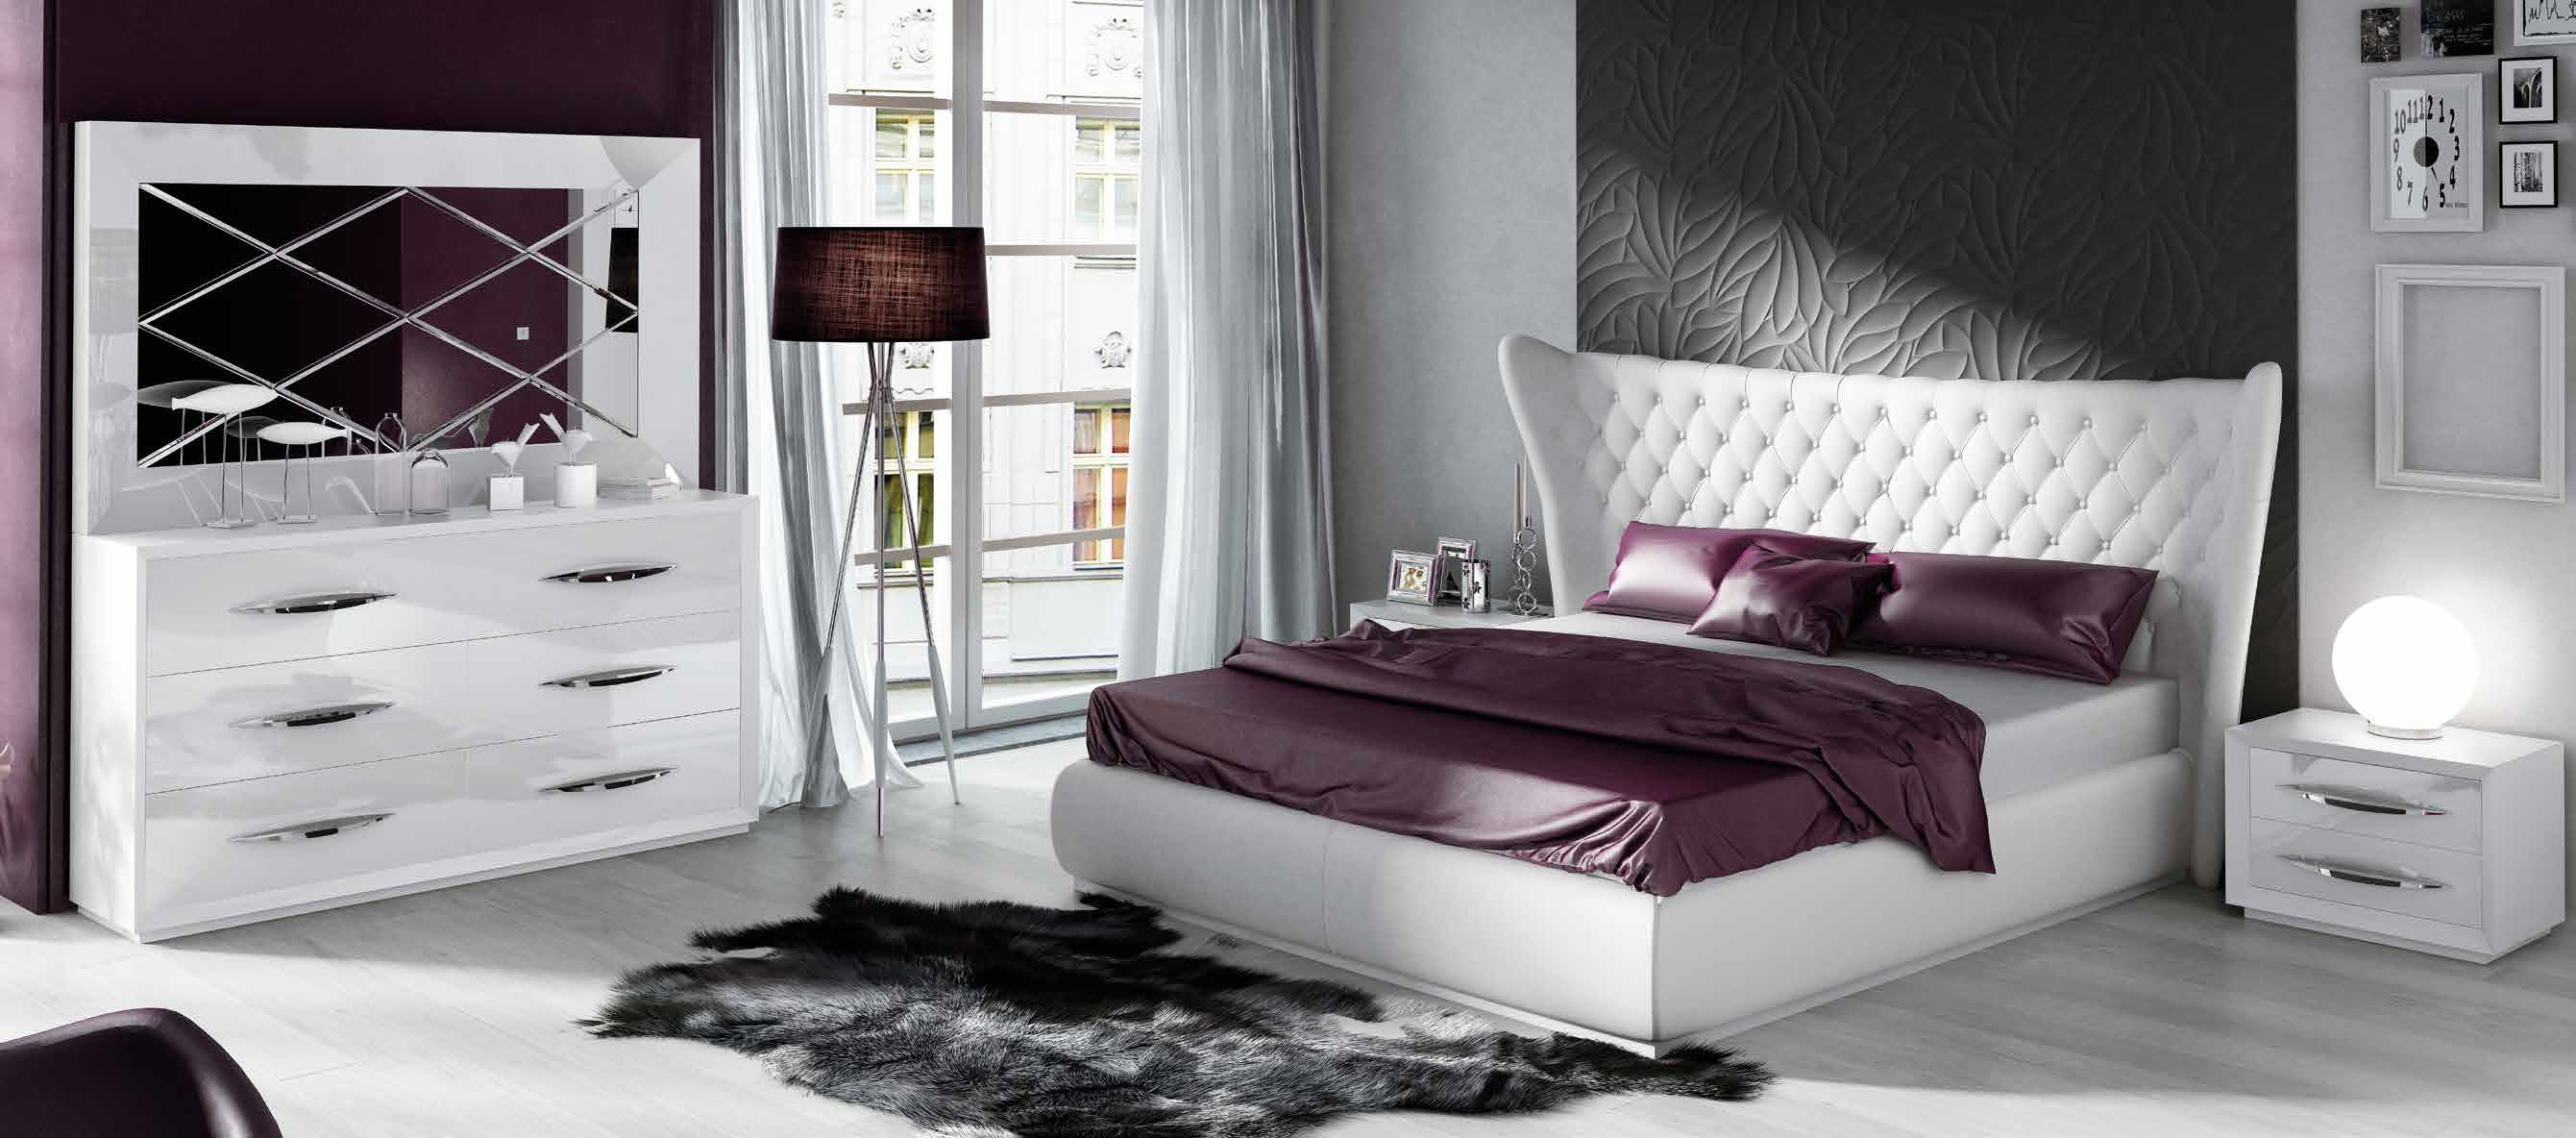 Brands Franco Furniture Bedrooms vol2, Spain DOR 83